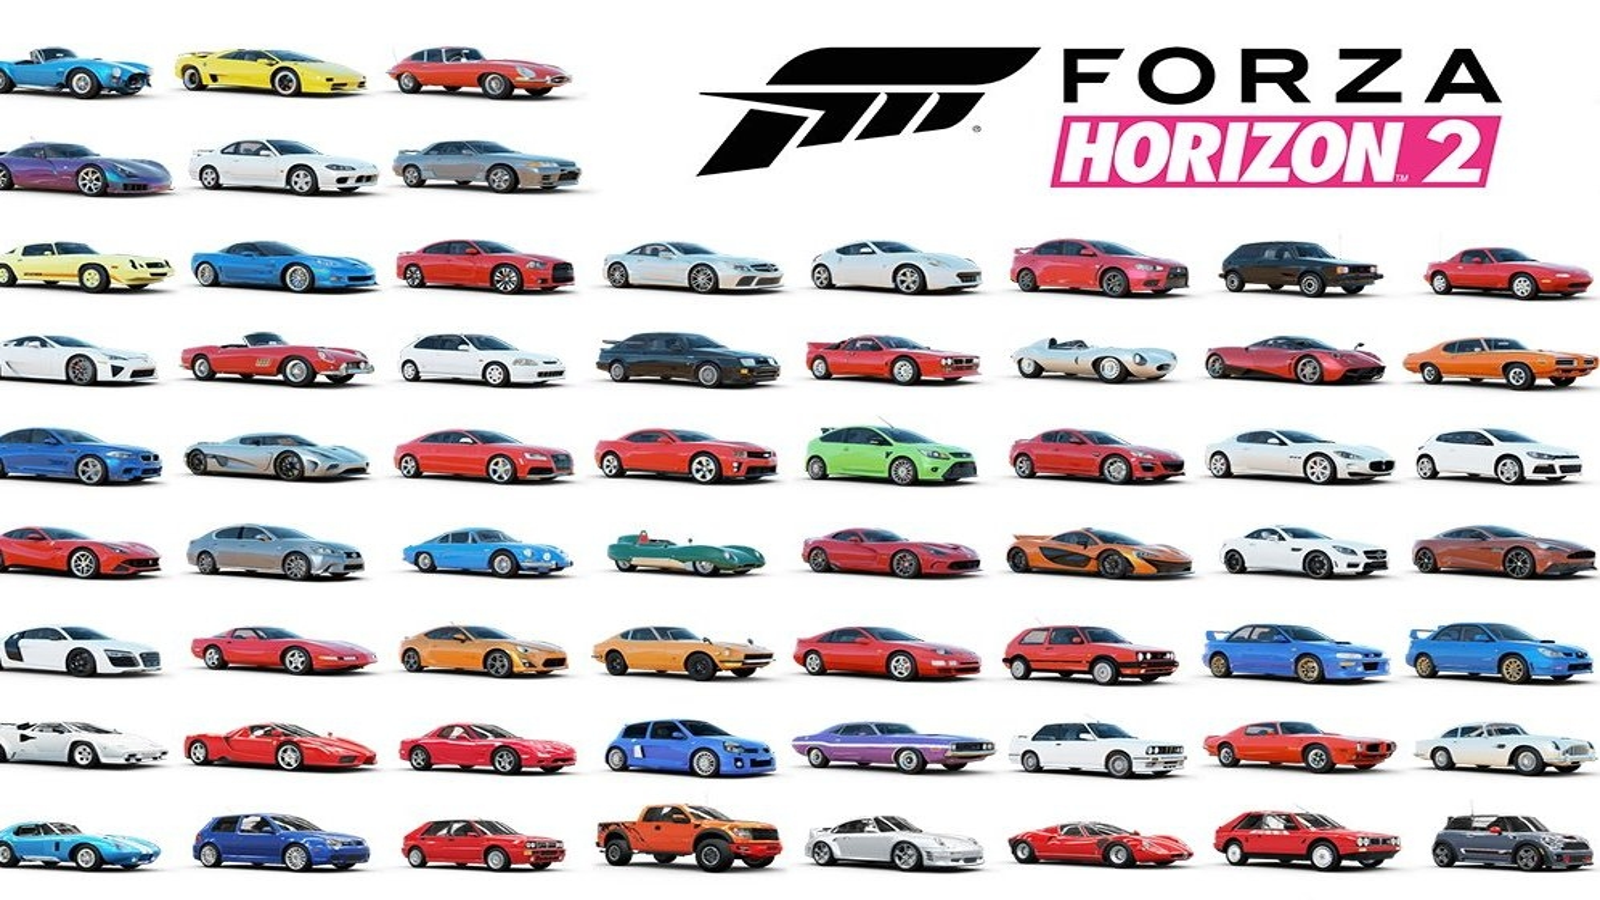 Forza Horizon #1,2,3 updated their - Forza Horizon #1,2,3